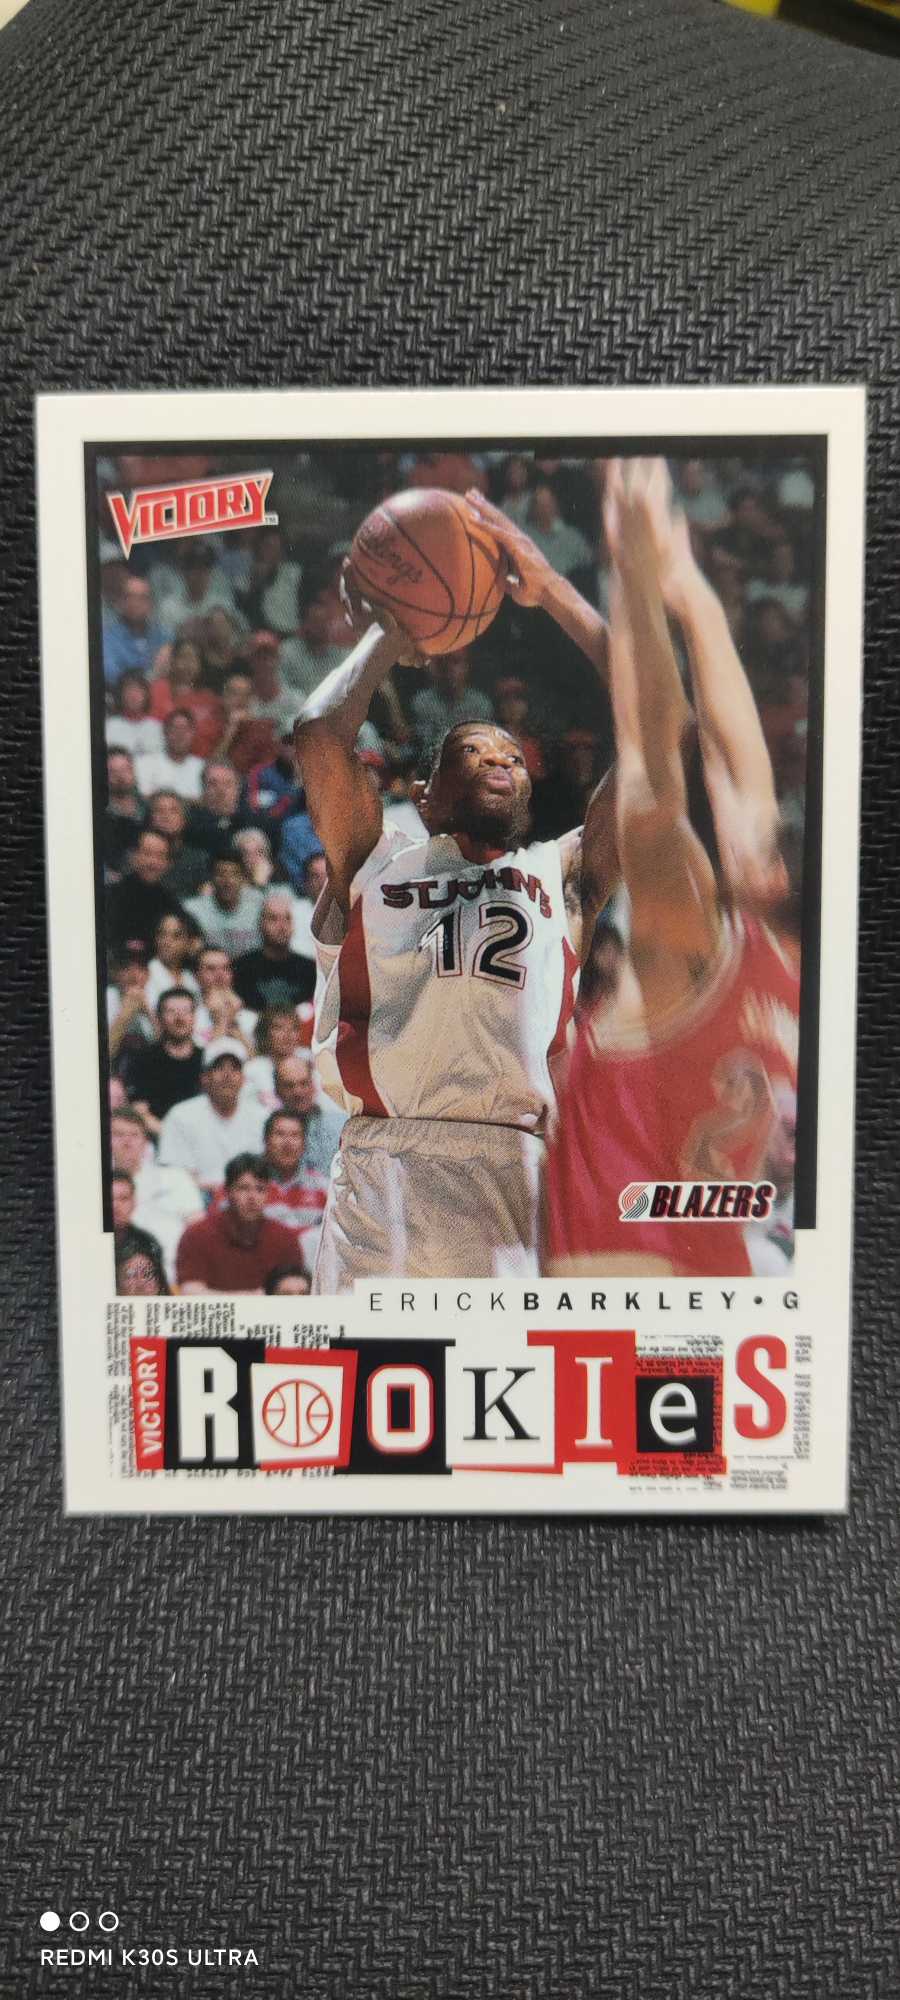 2000 Upper Deck Basketball Erick Barkley RC 埃里克 巴克利 新秀特卡 开拓者队 no.271 凑套必备 可累计